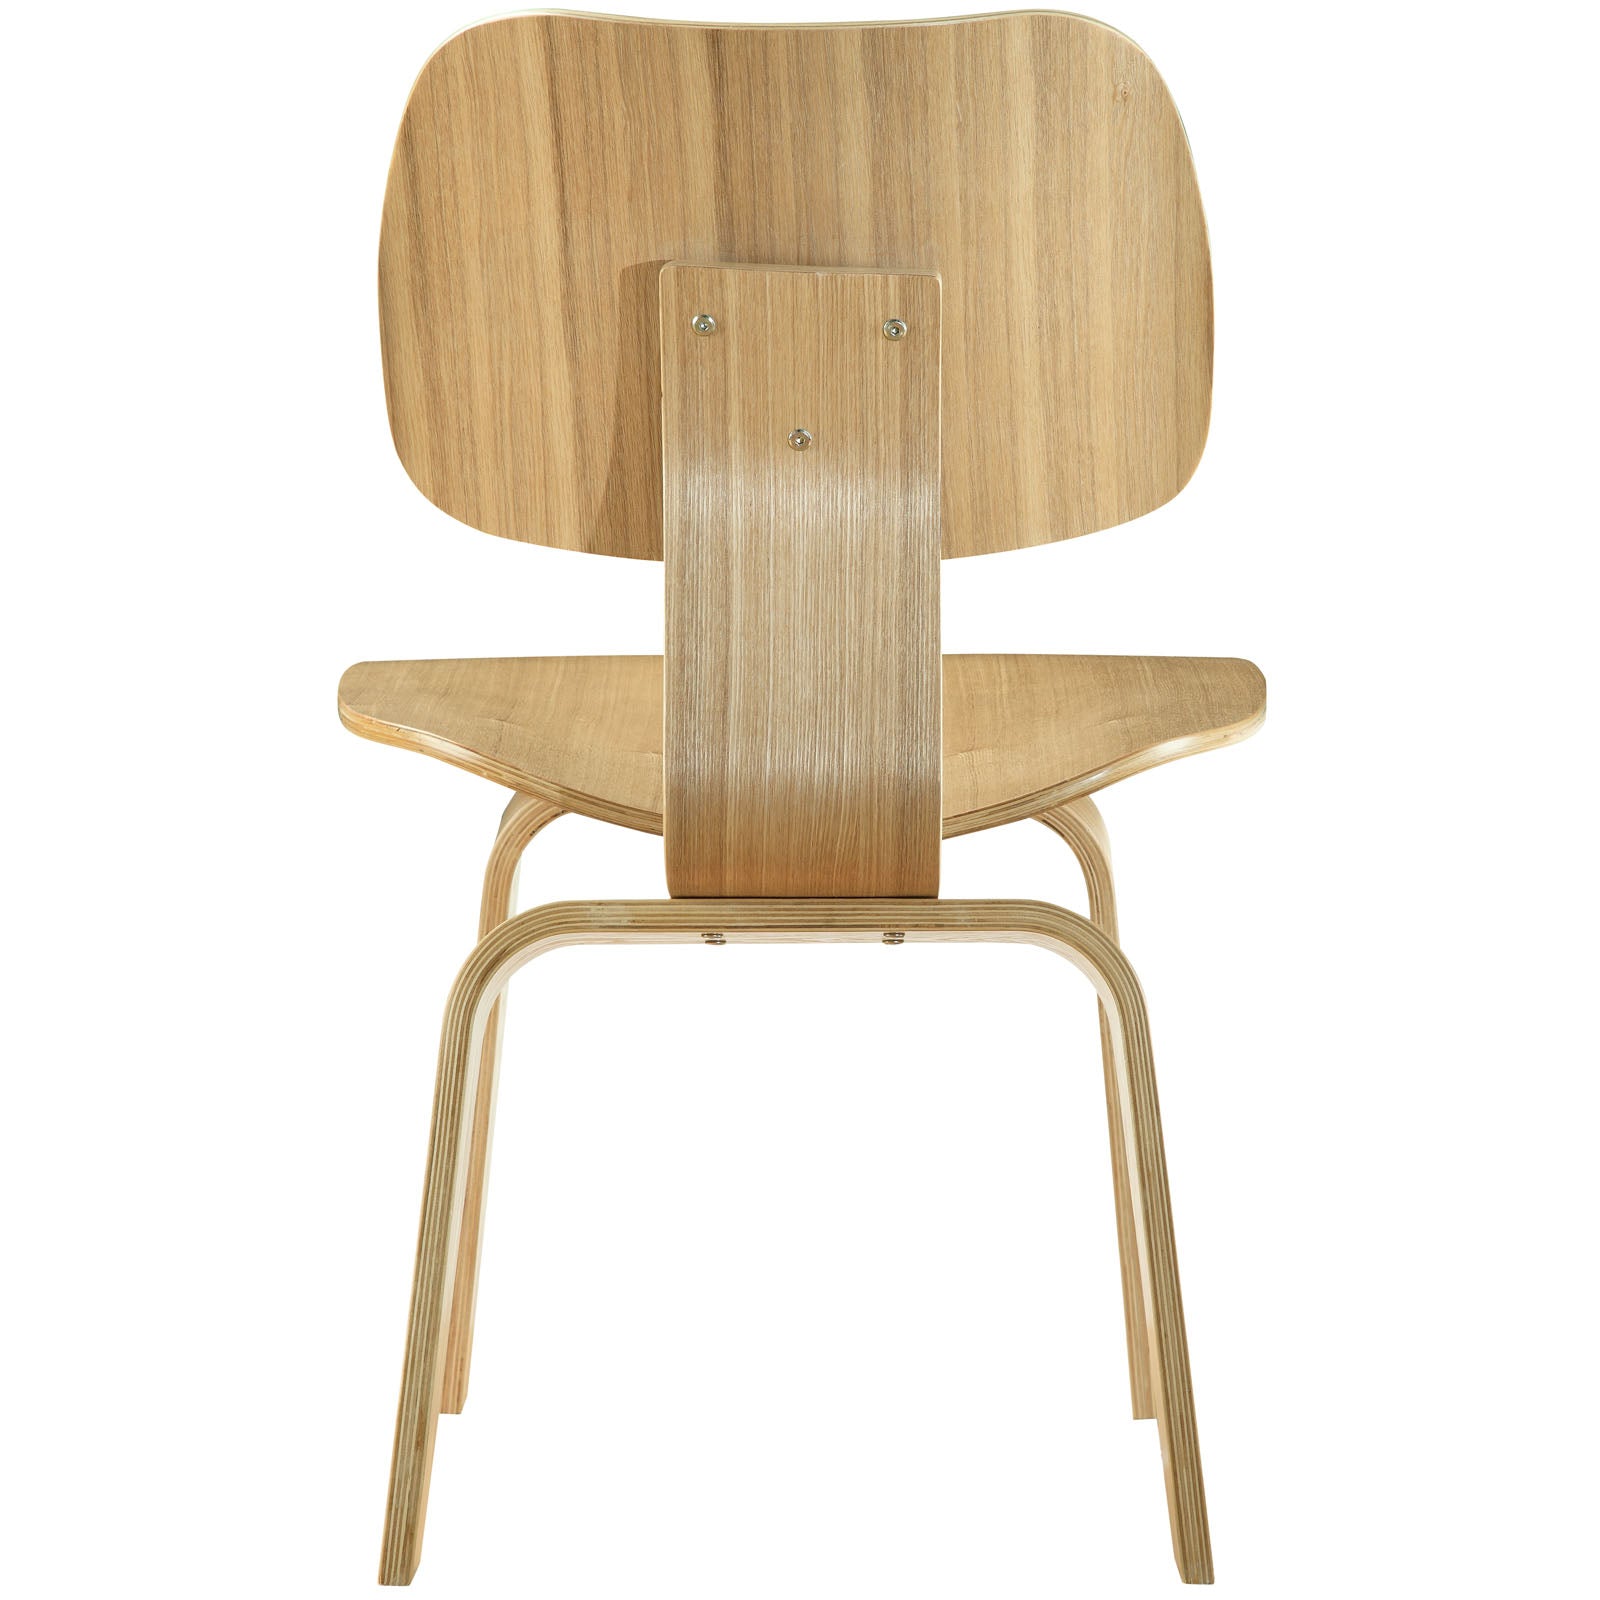 Fathom Dining Wood Side Chair - East Shore Modern Home Furnishings